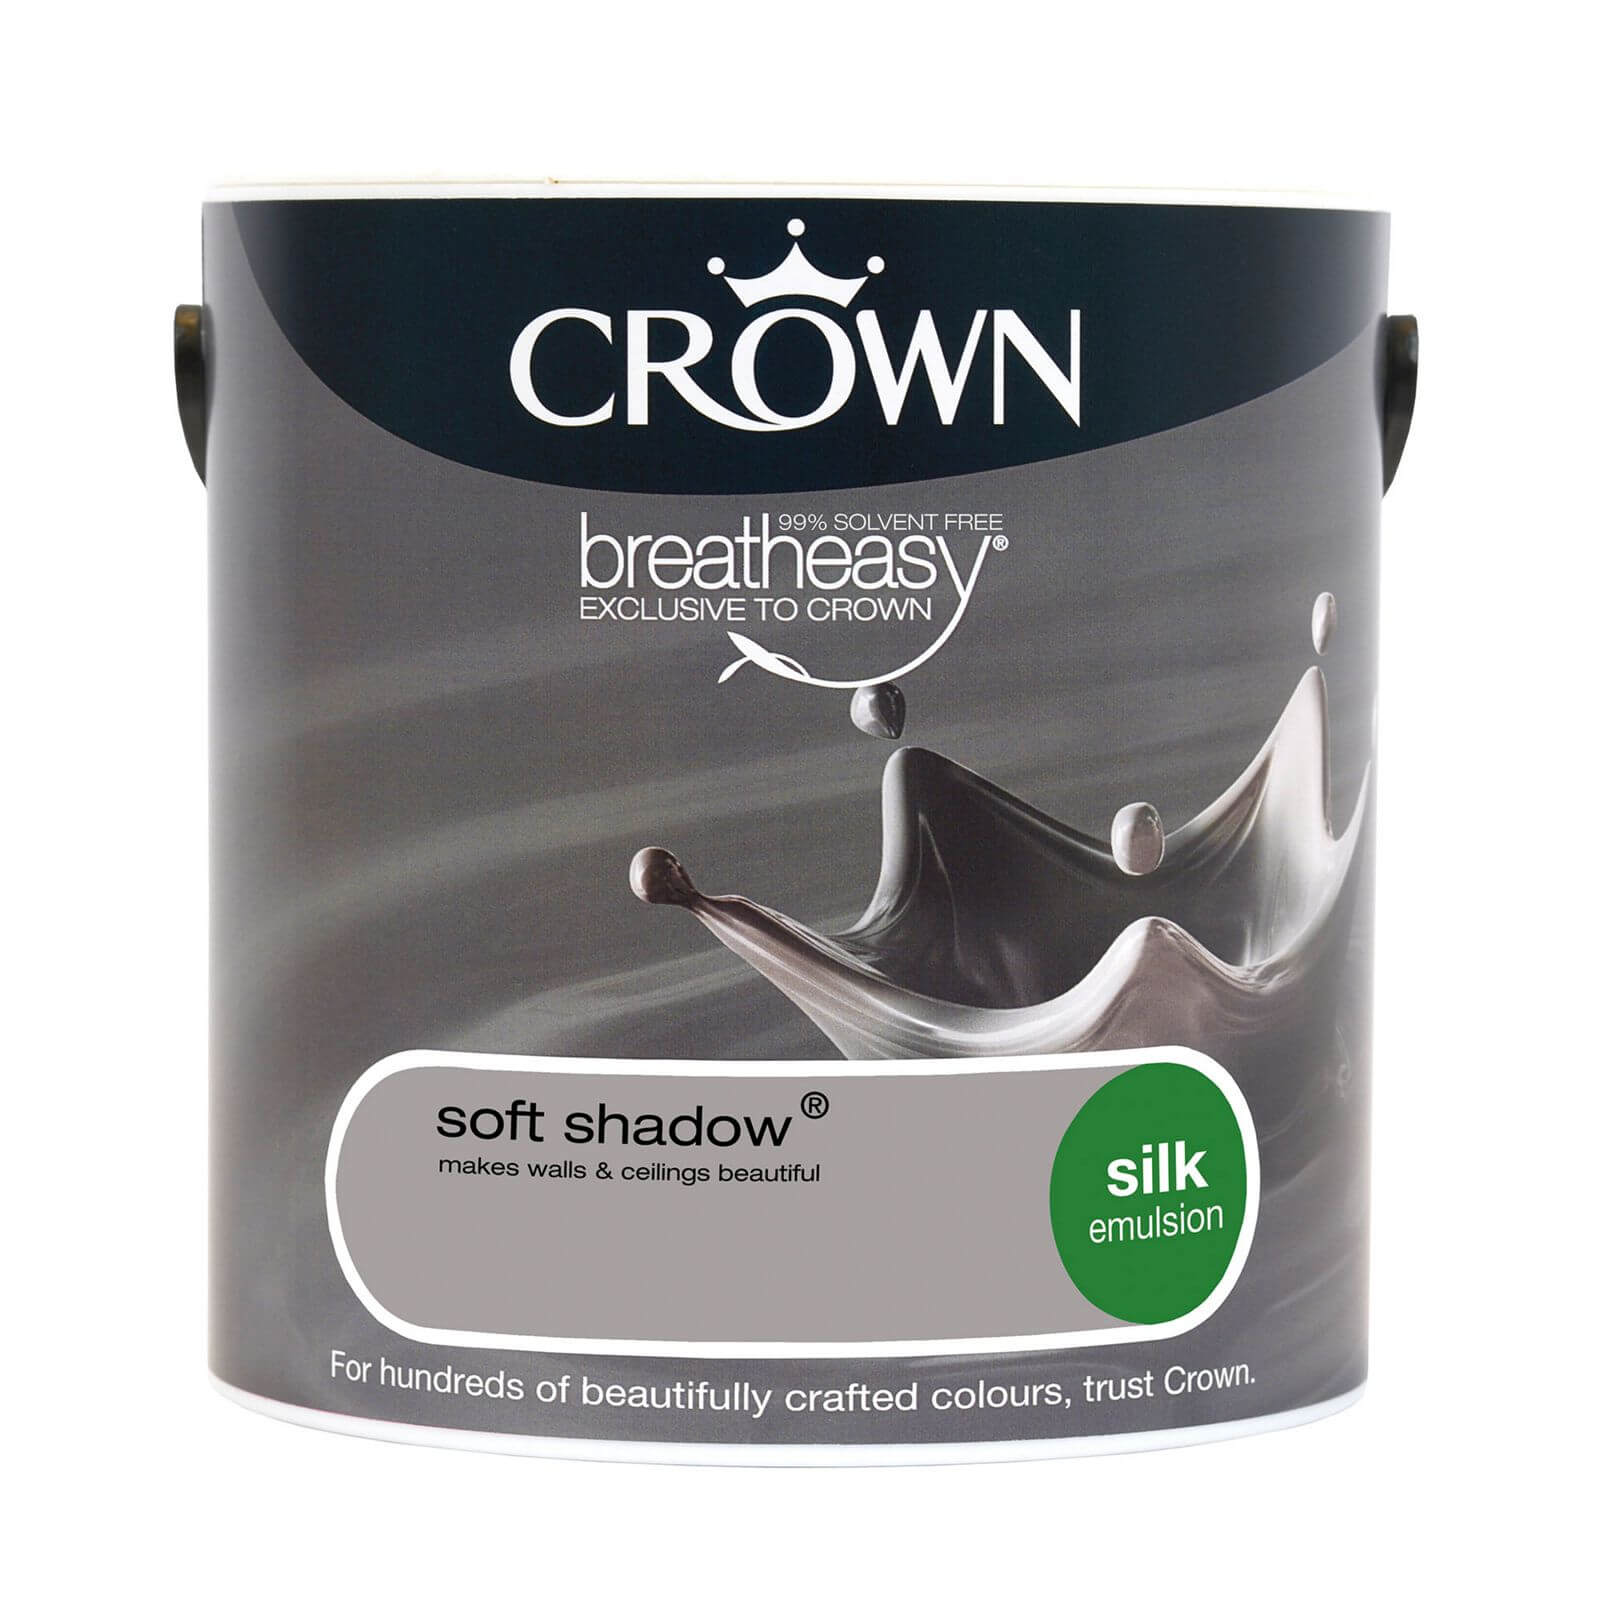 Crown Breatheasy Standard Emulsion Soft Shadow - Silk Paint - 2.5L